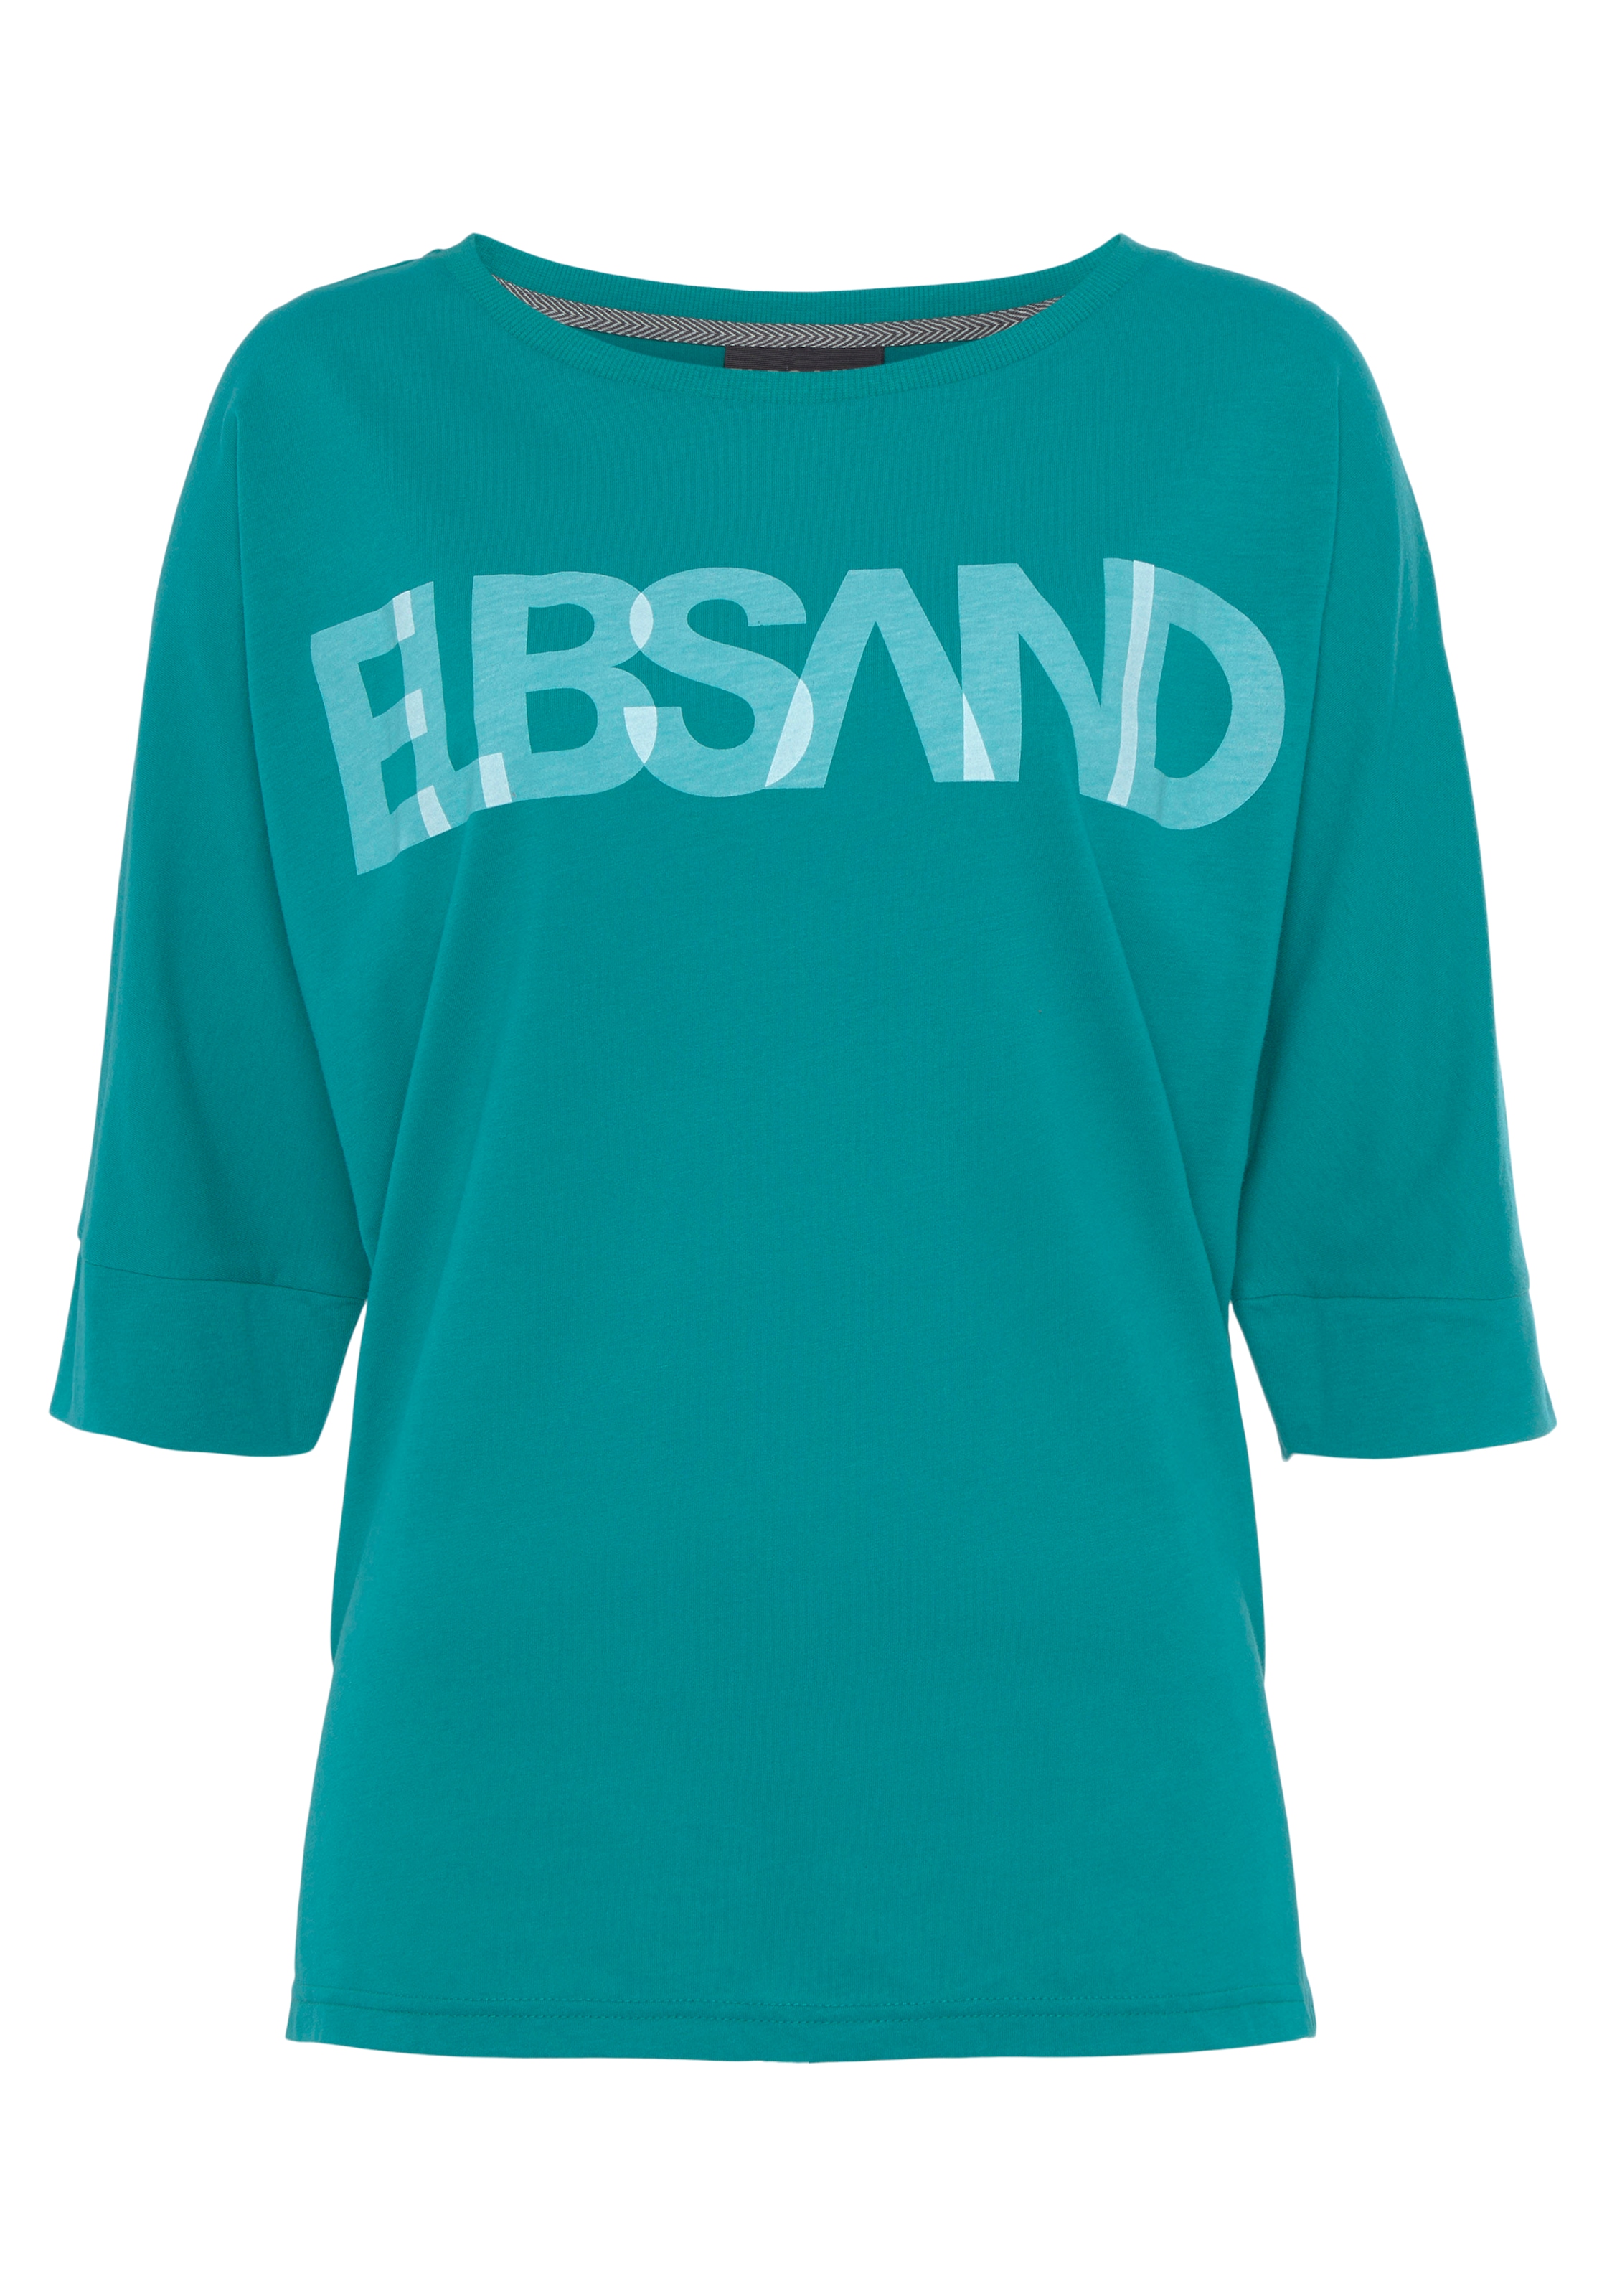 Elbsand 3/4-Arm-Shirt, mit Logodruck, lockere shoppen Passform Baumwoll-Mix